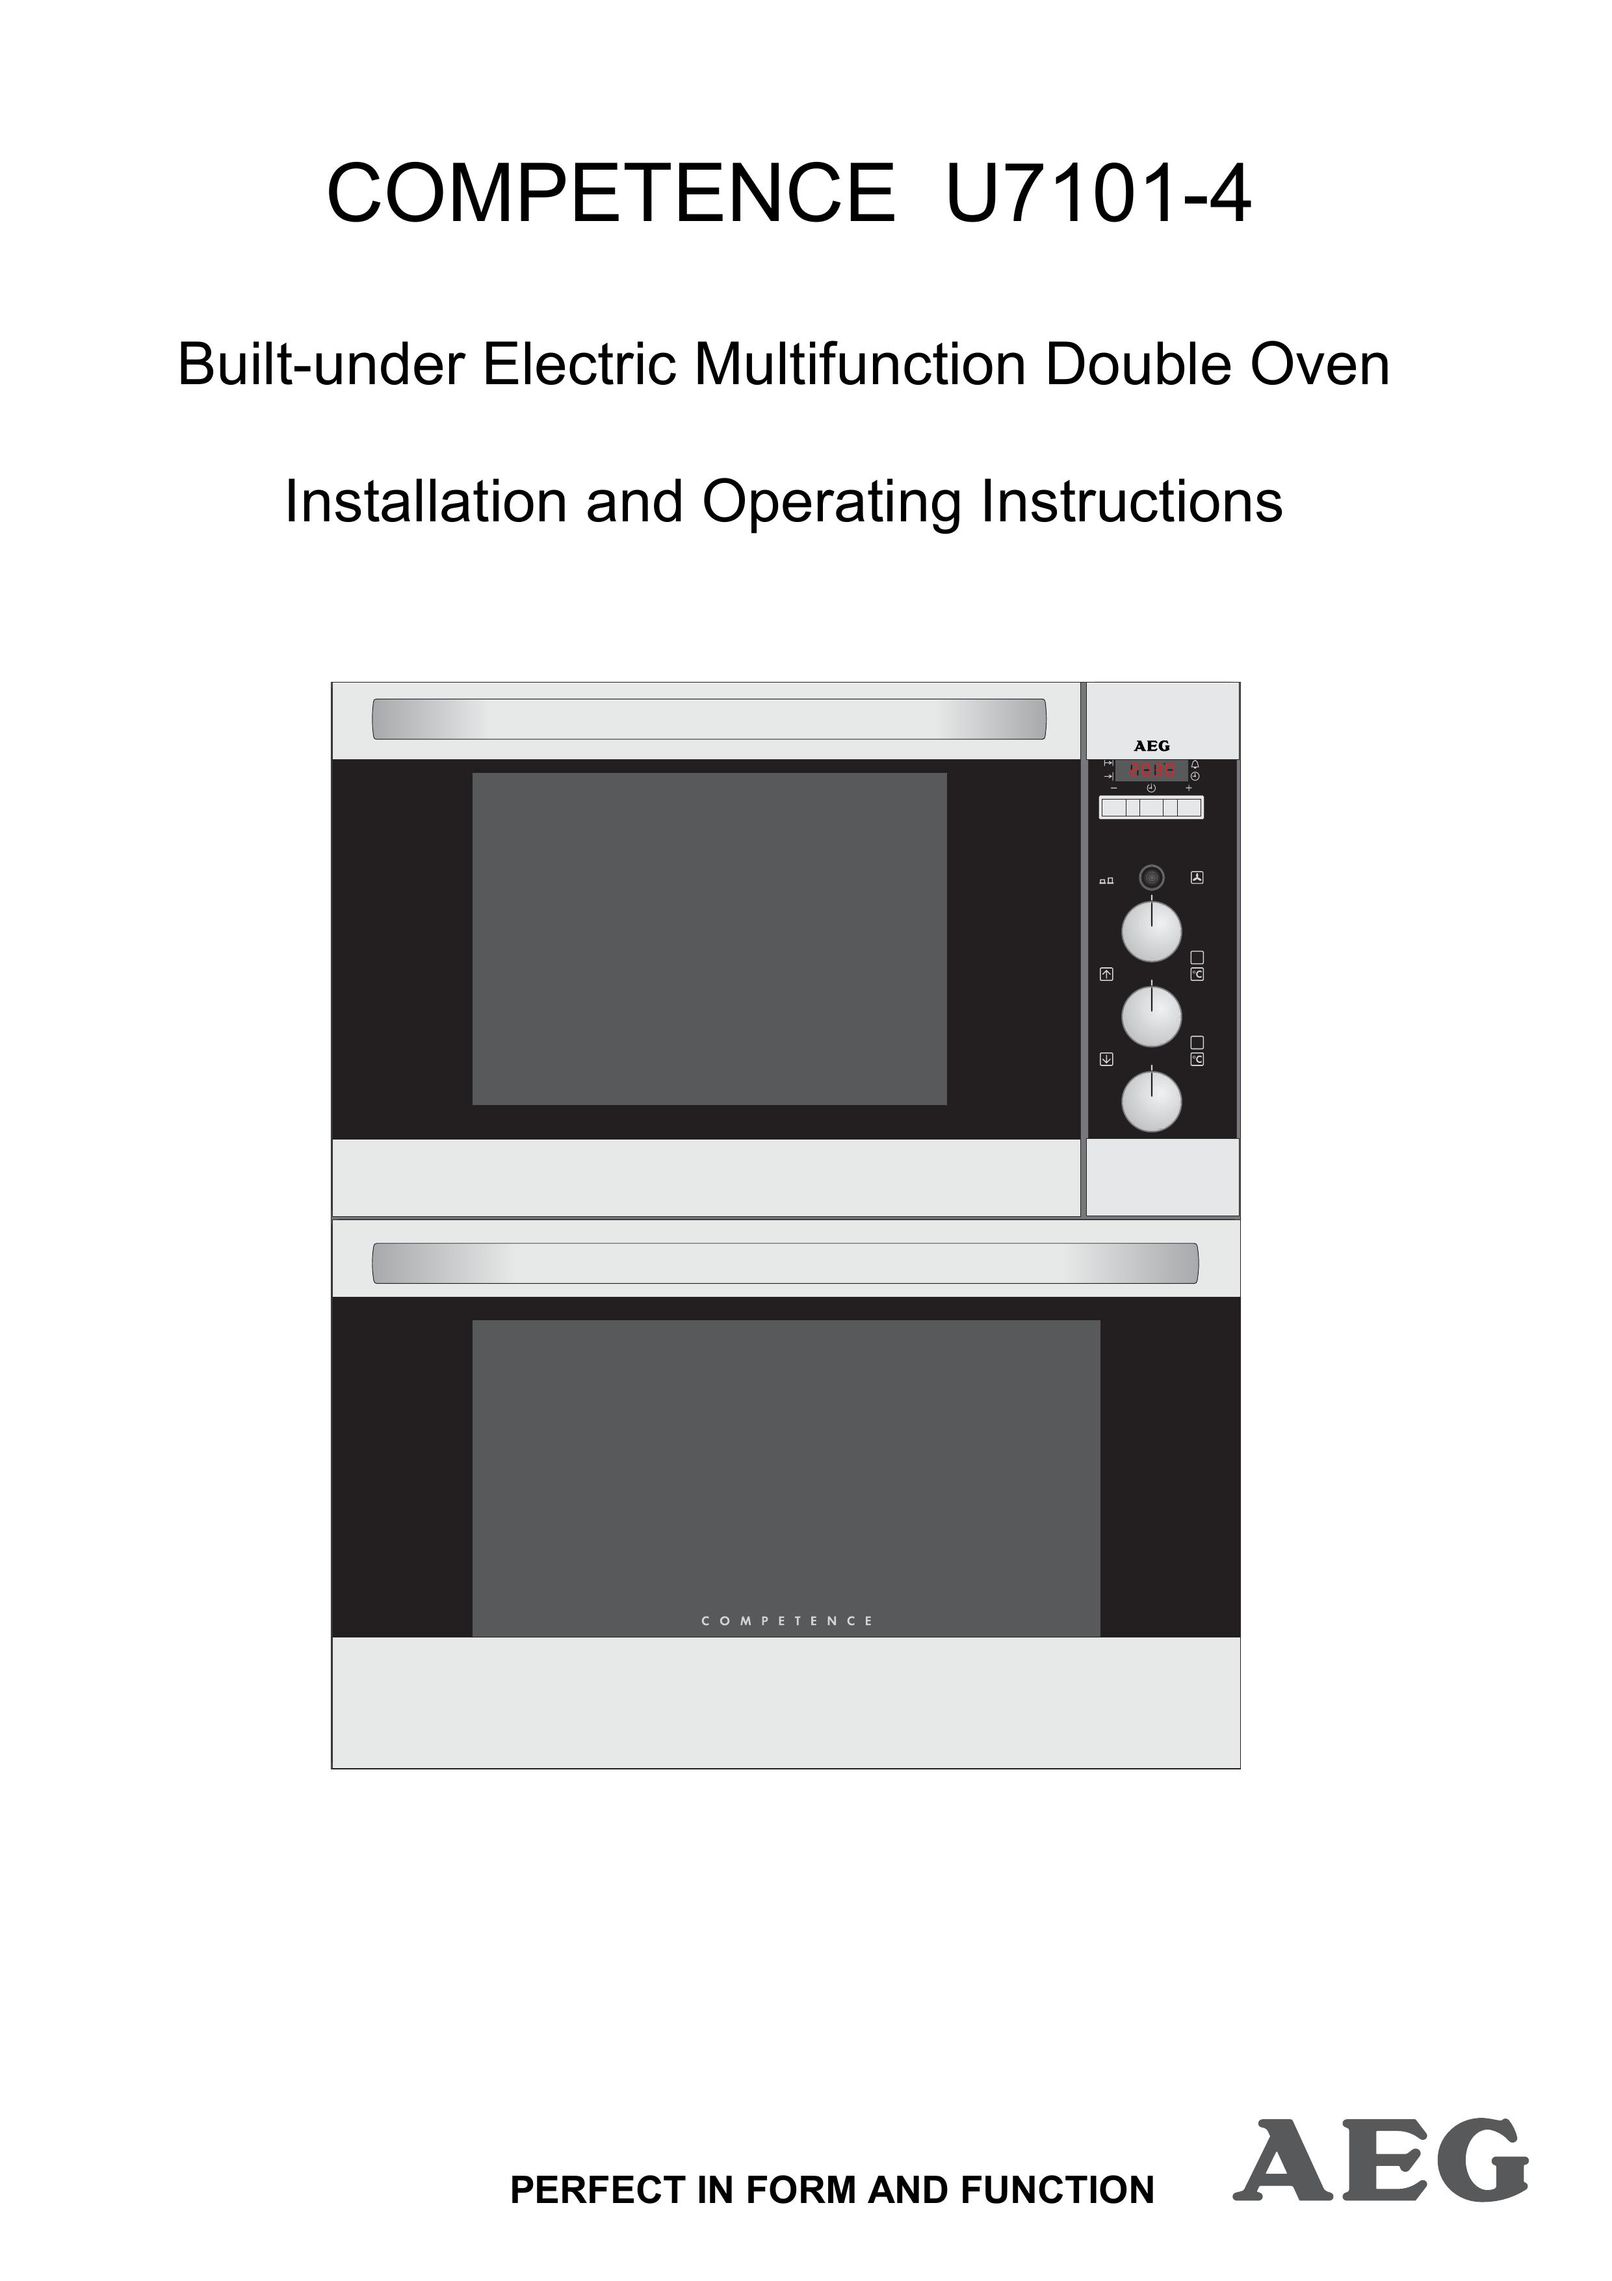 AEG 311704300 Double Oven User Manual